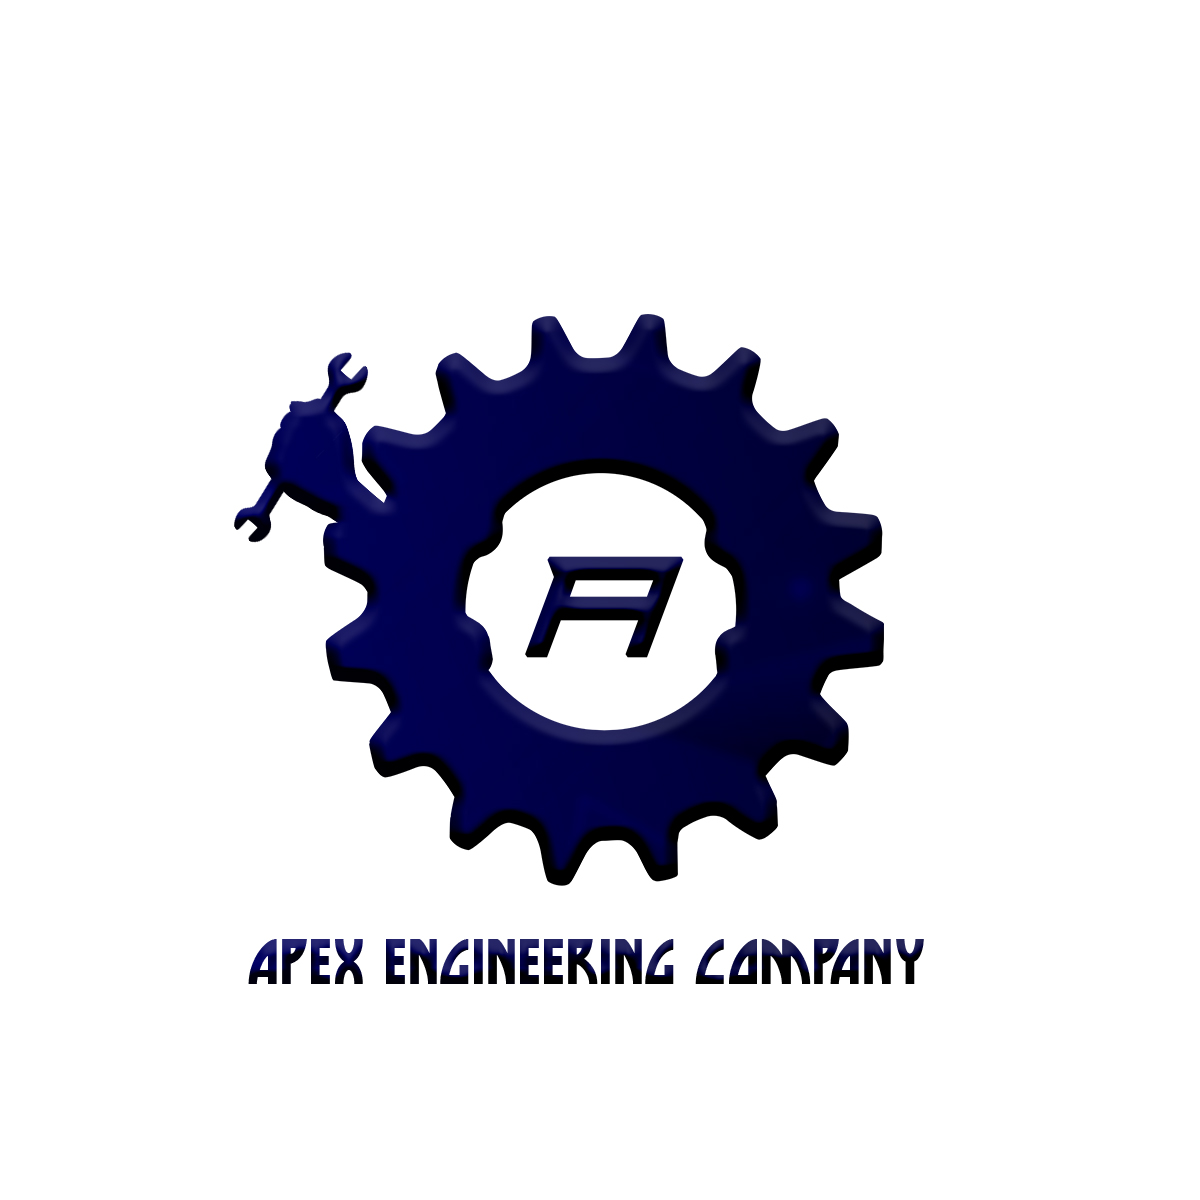 Apex Engineering Company provider